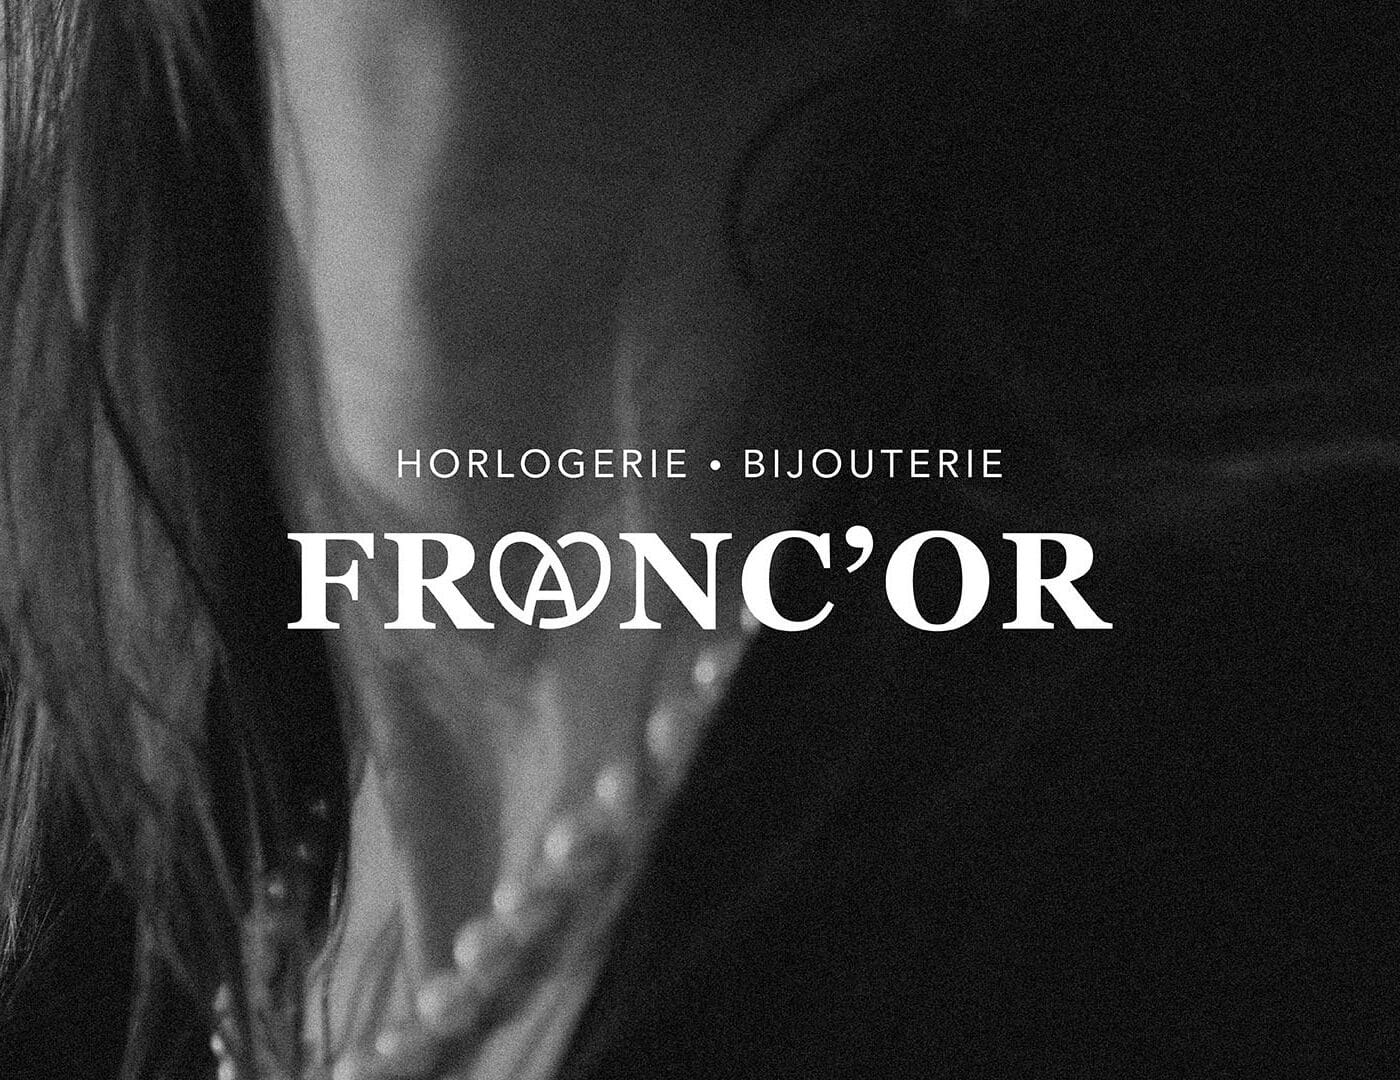 projet FRANC OR logo 1400x1080 - Bijouterie Franc'Or